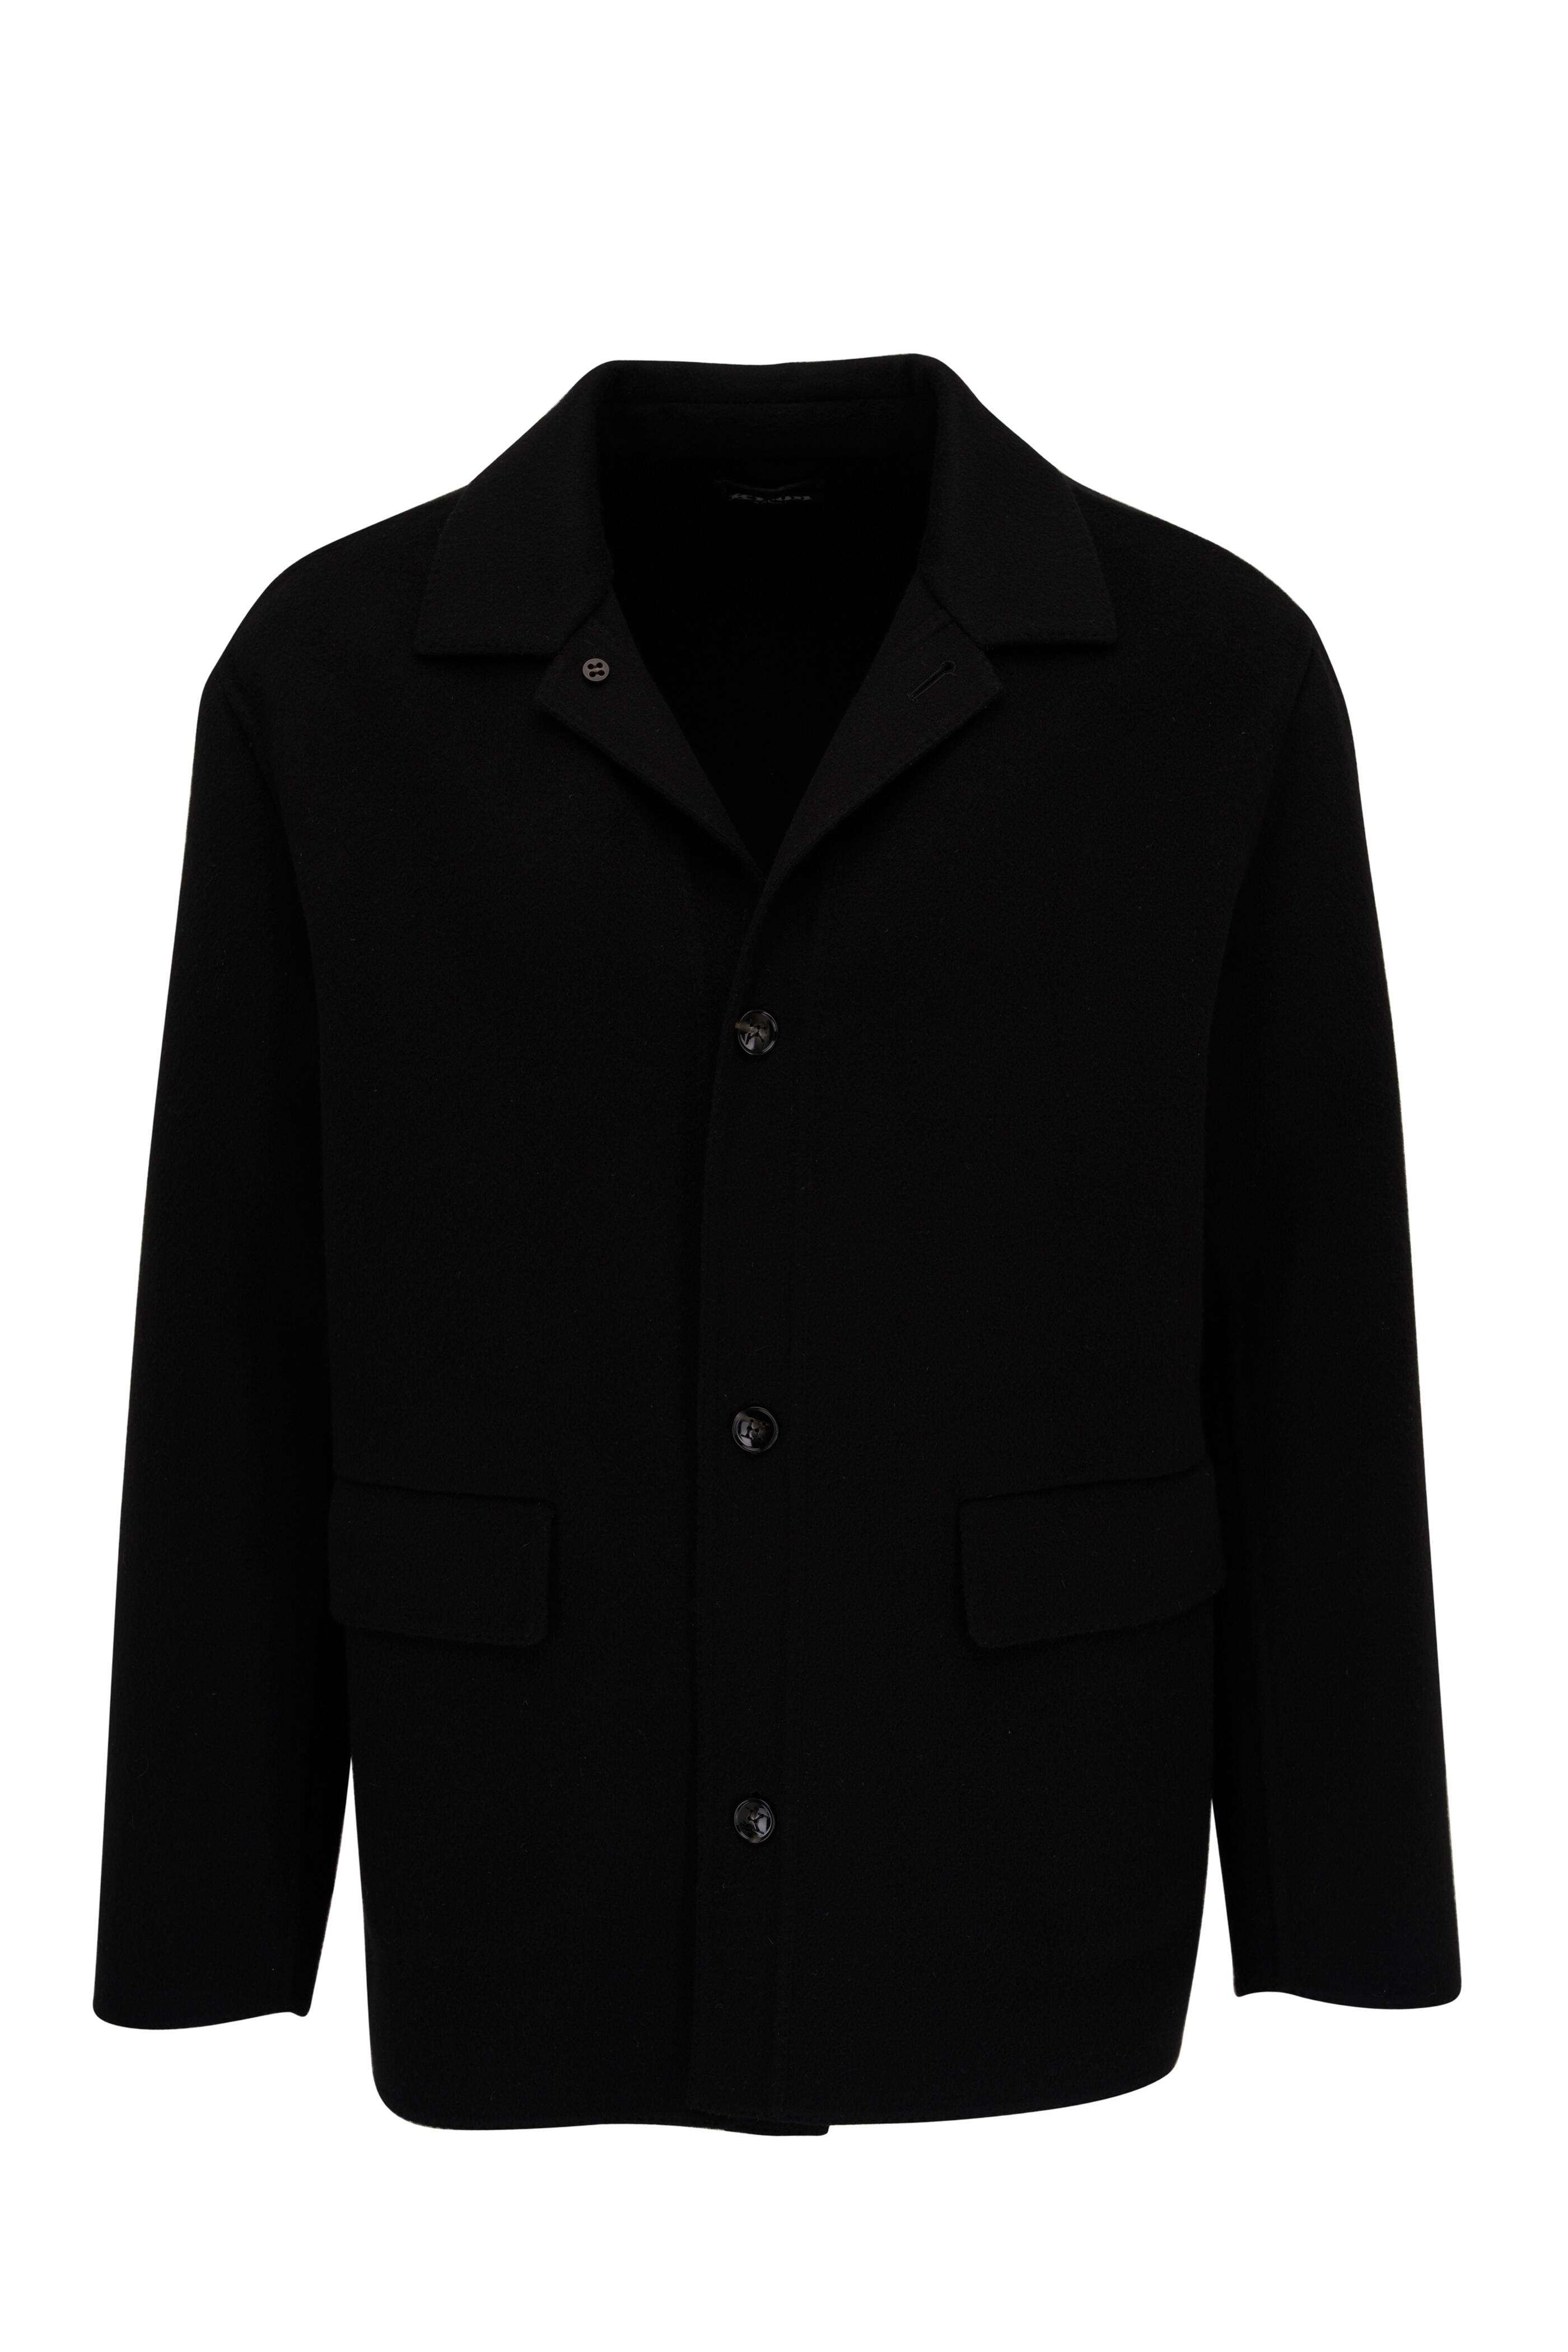 Kiton - Black Wool & Cashmere Coat | Mitchell Stores